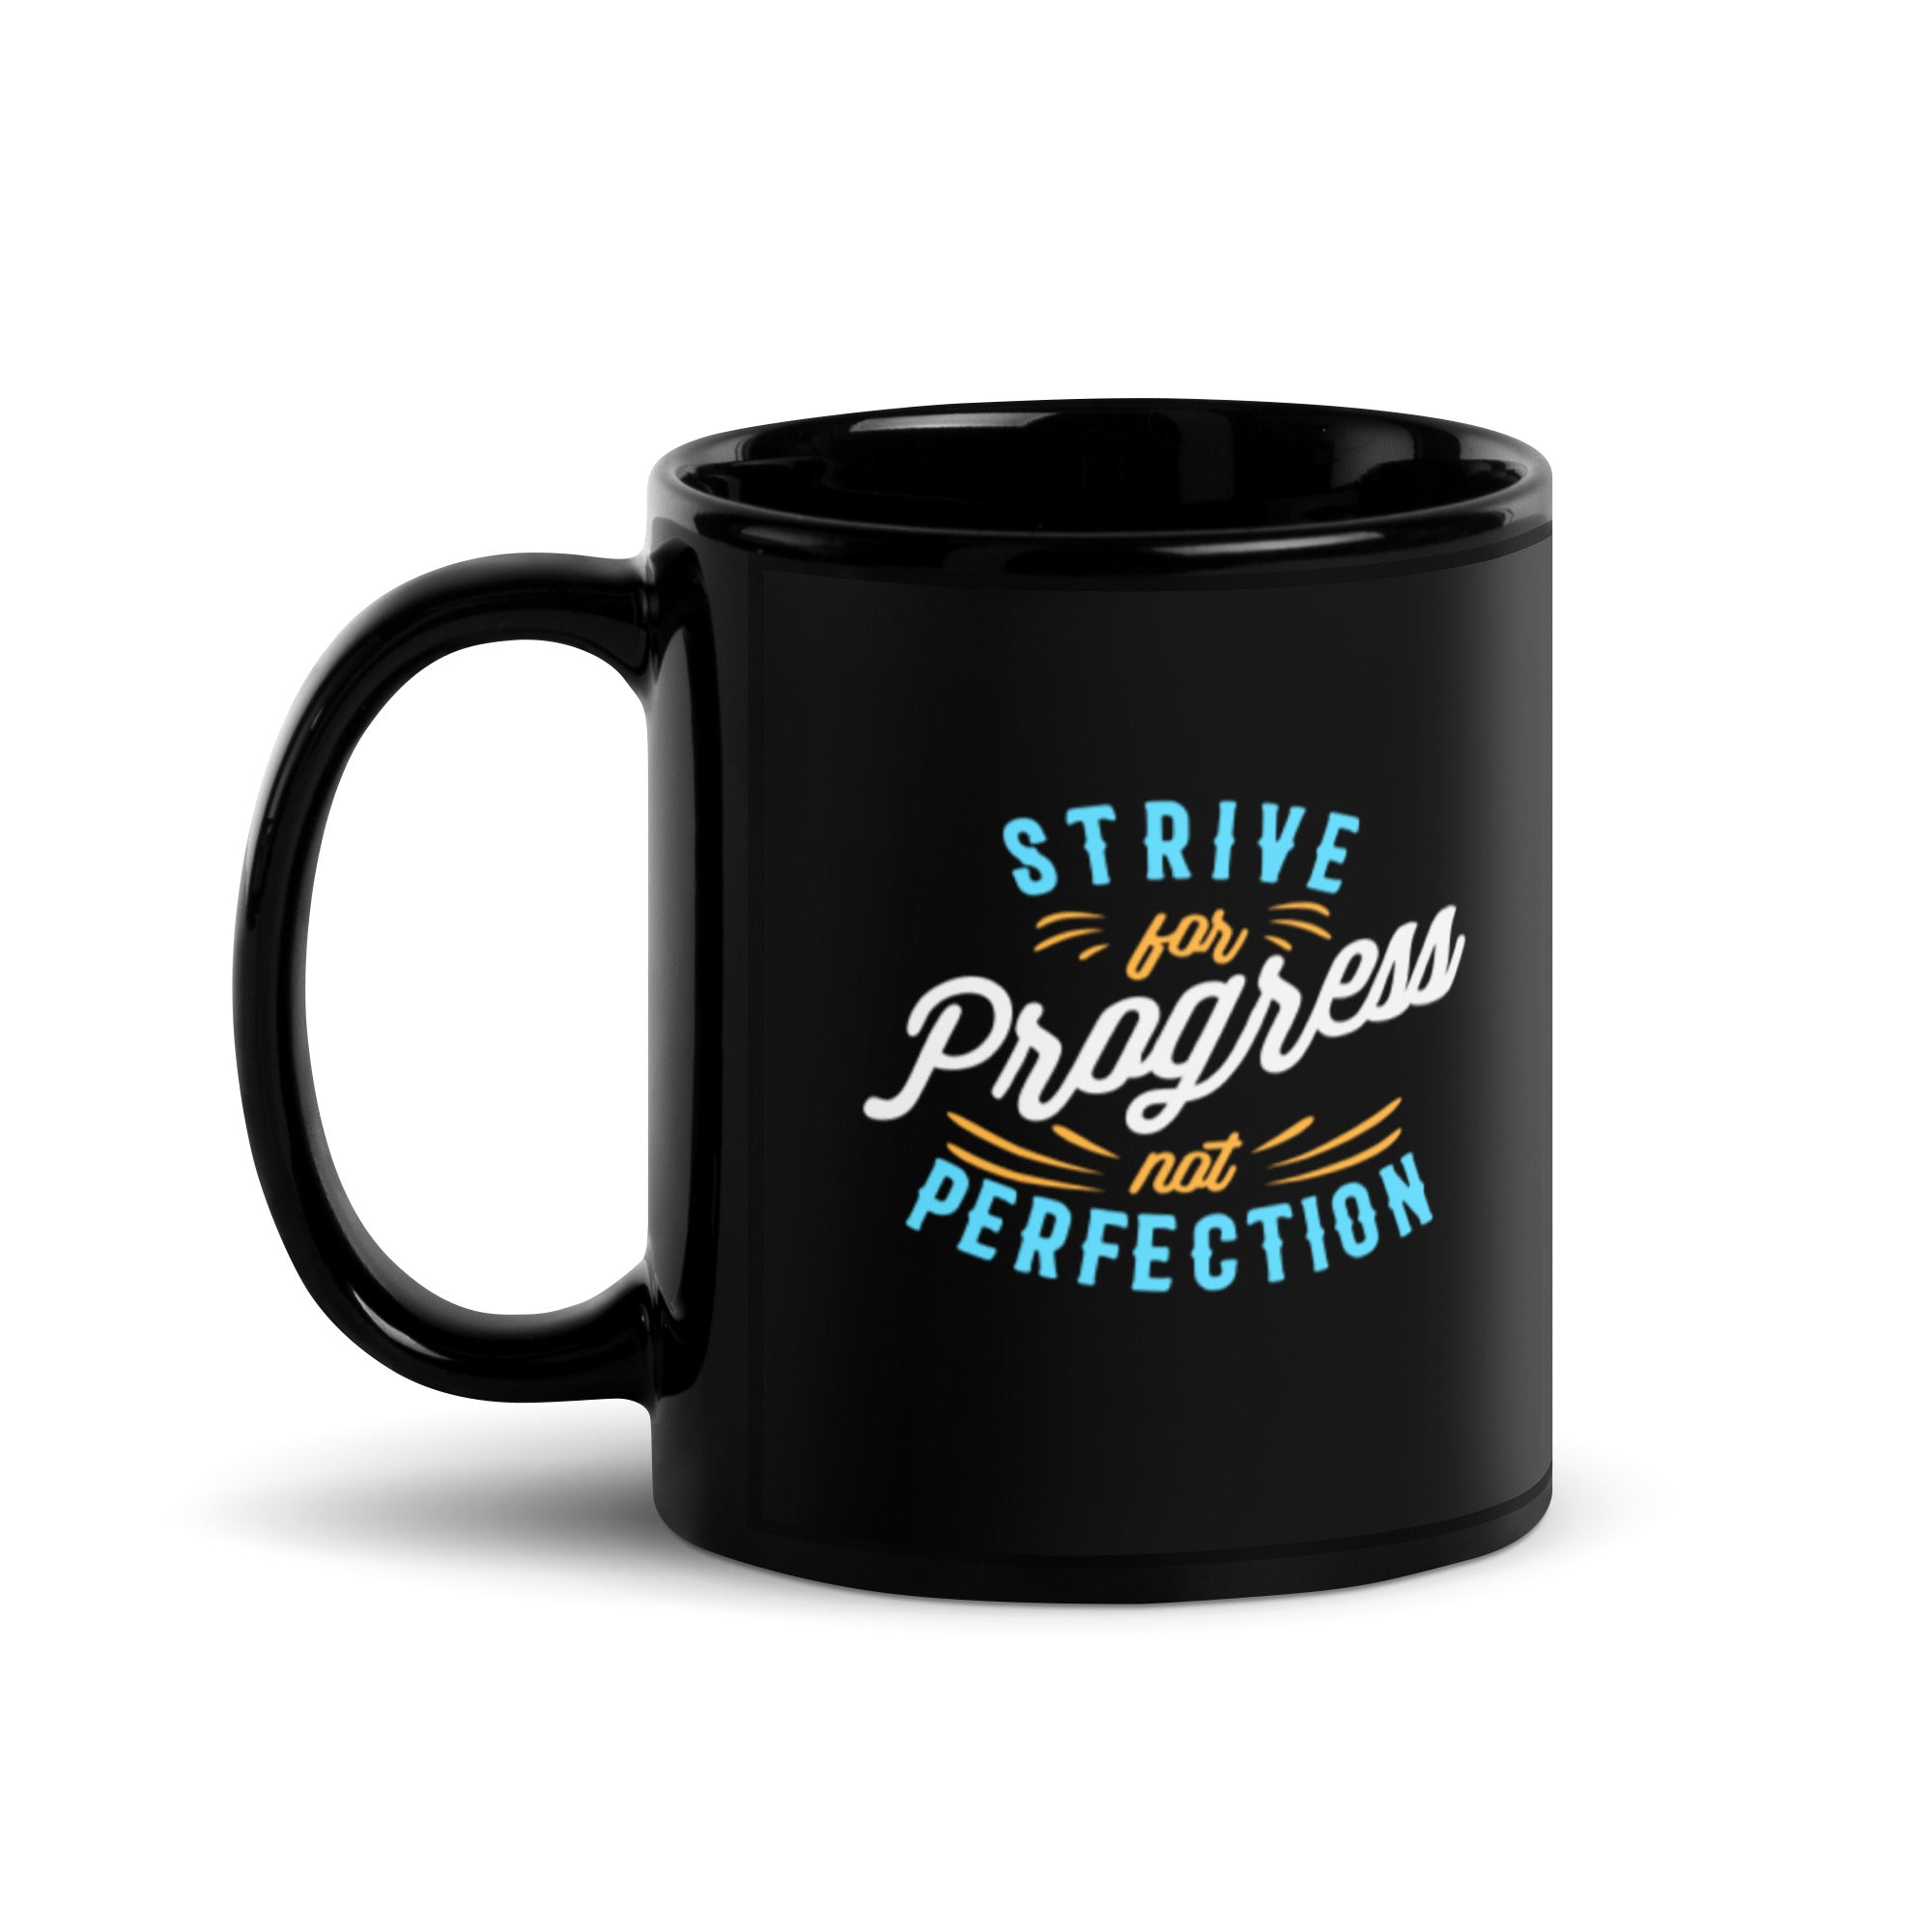 Strive For Progress Not Perfection - Black Glossy Mug